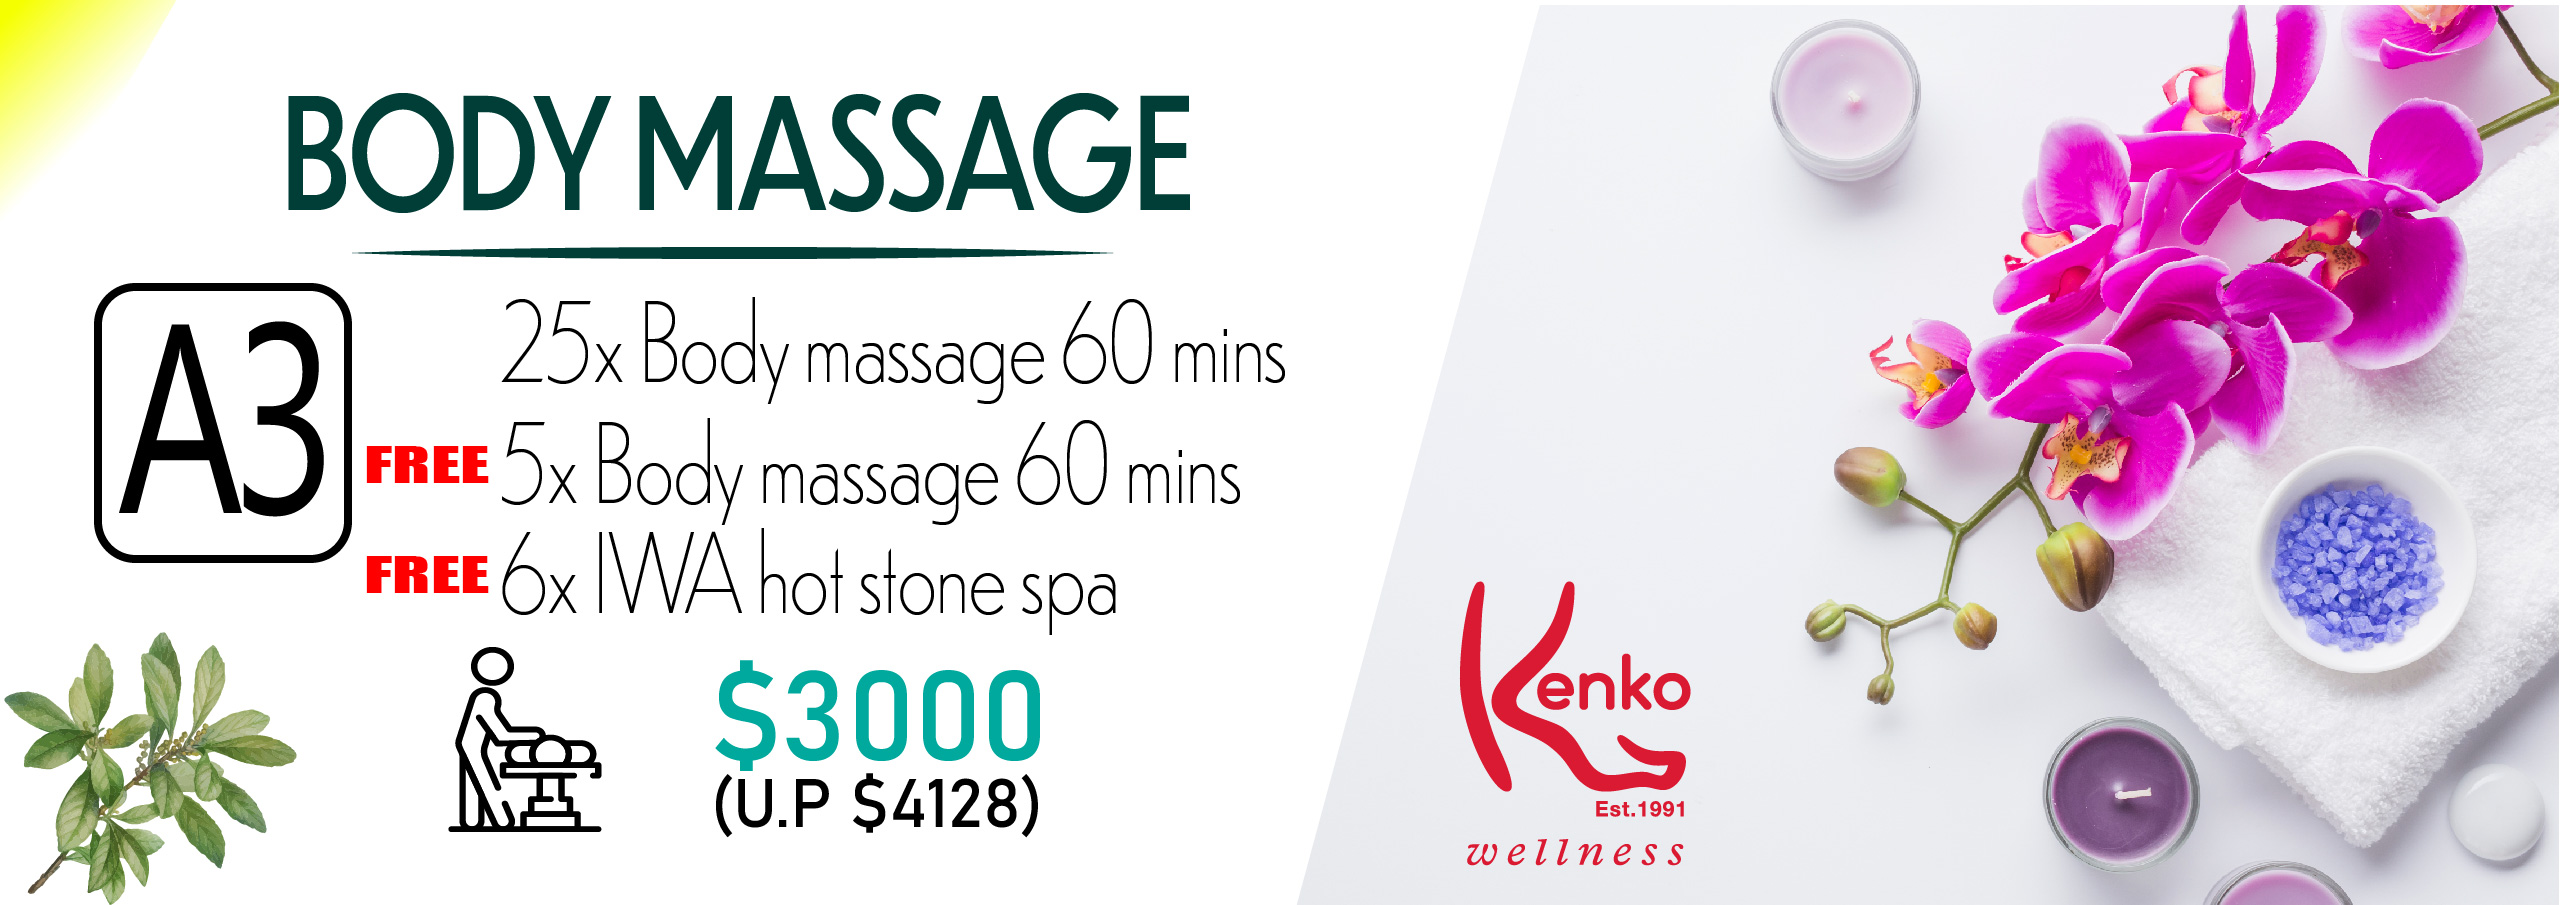 body massage premium kenko